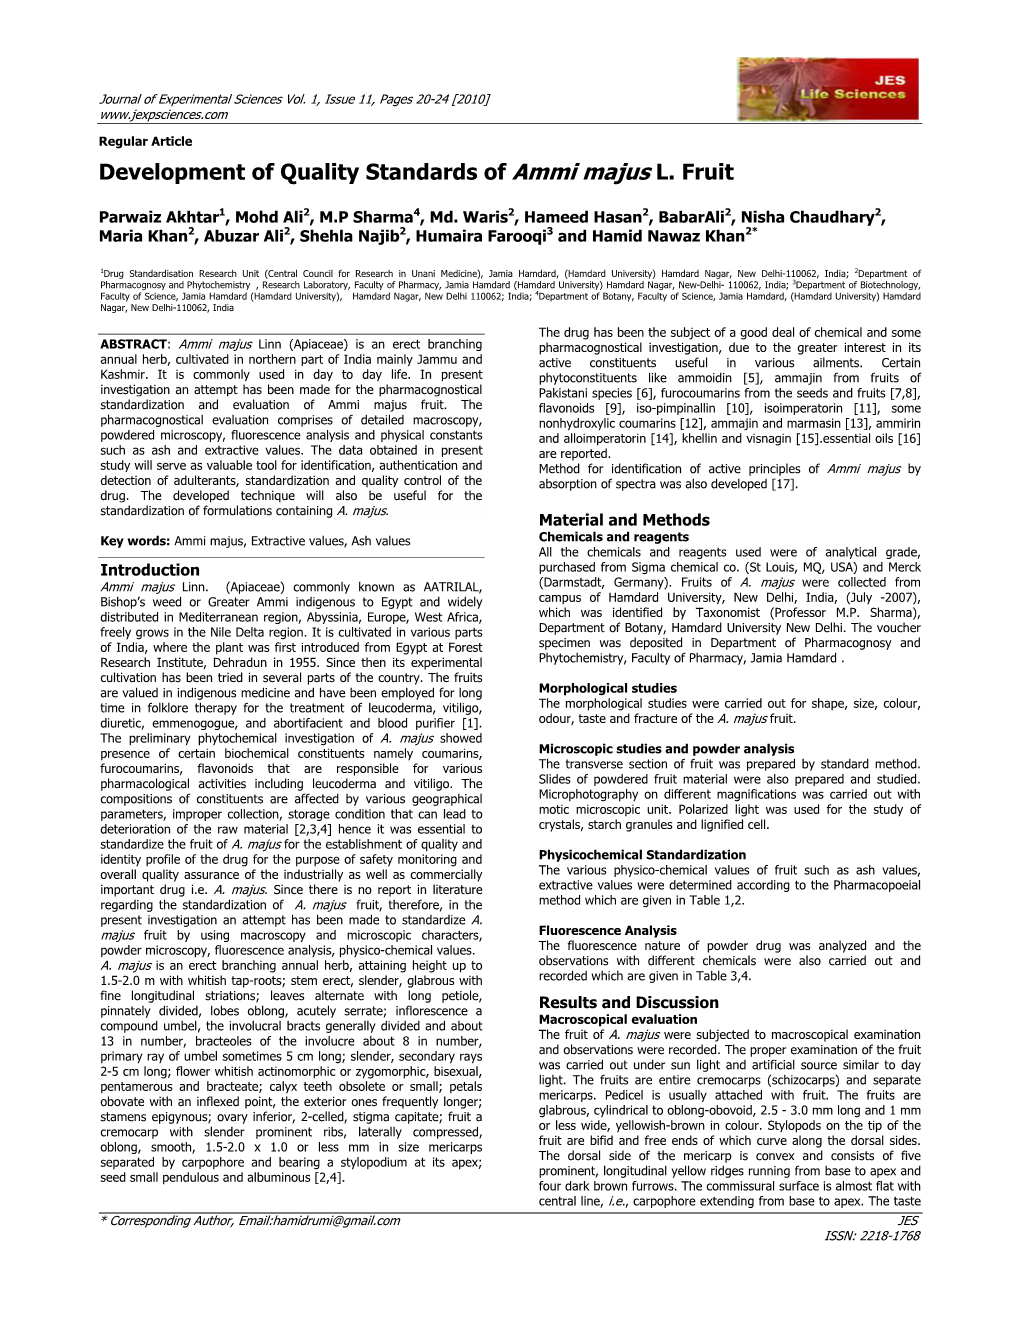 Development of Quality Standards of Ammi Majus L. Fruit